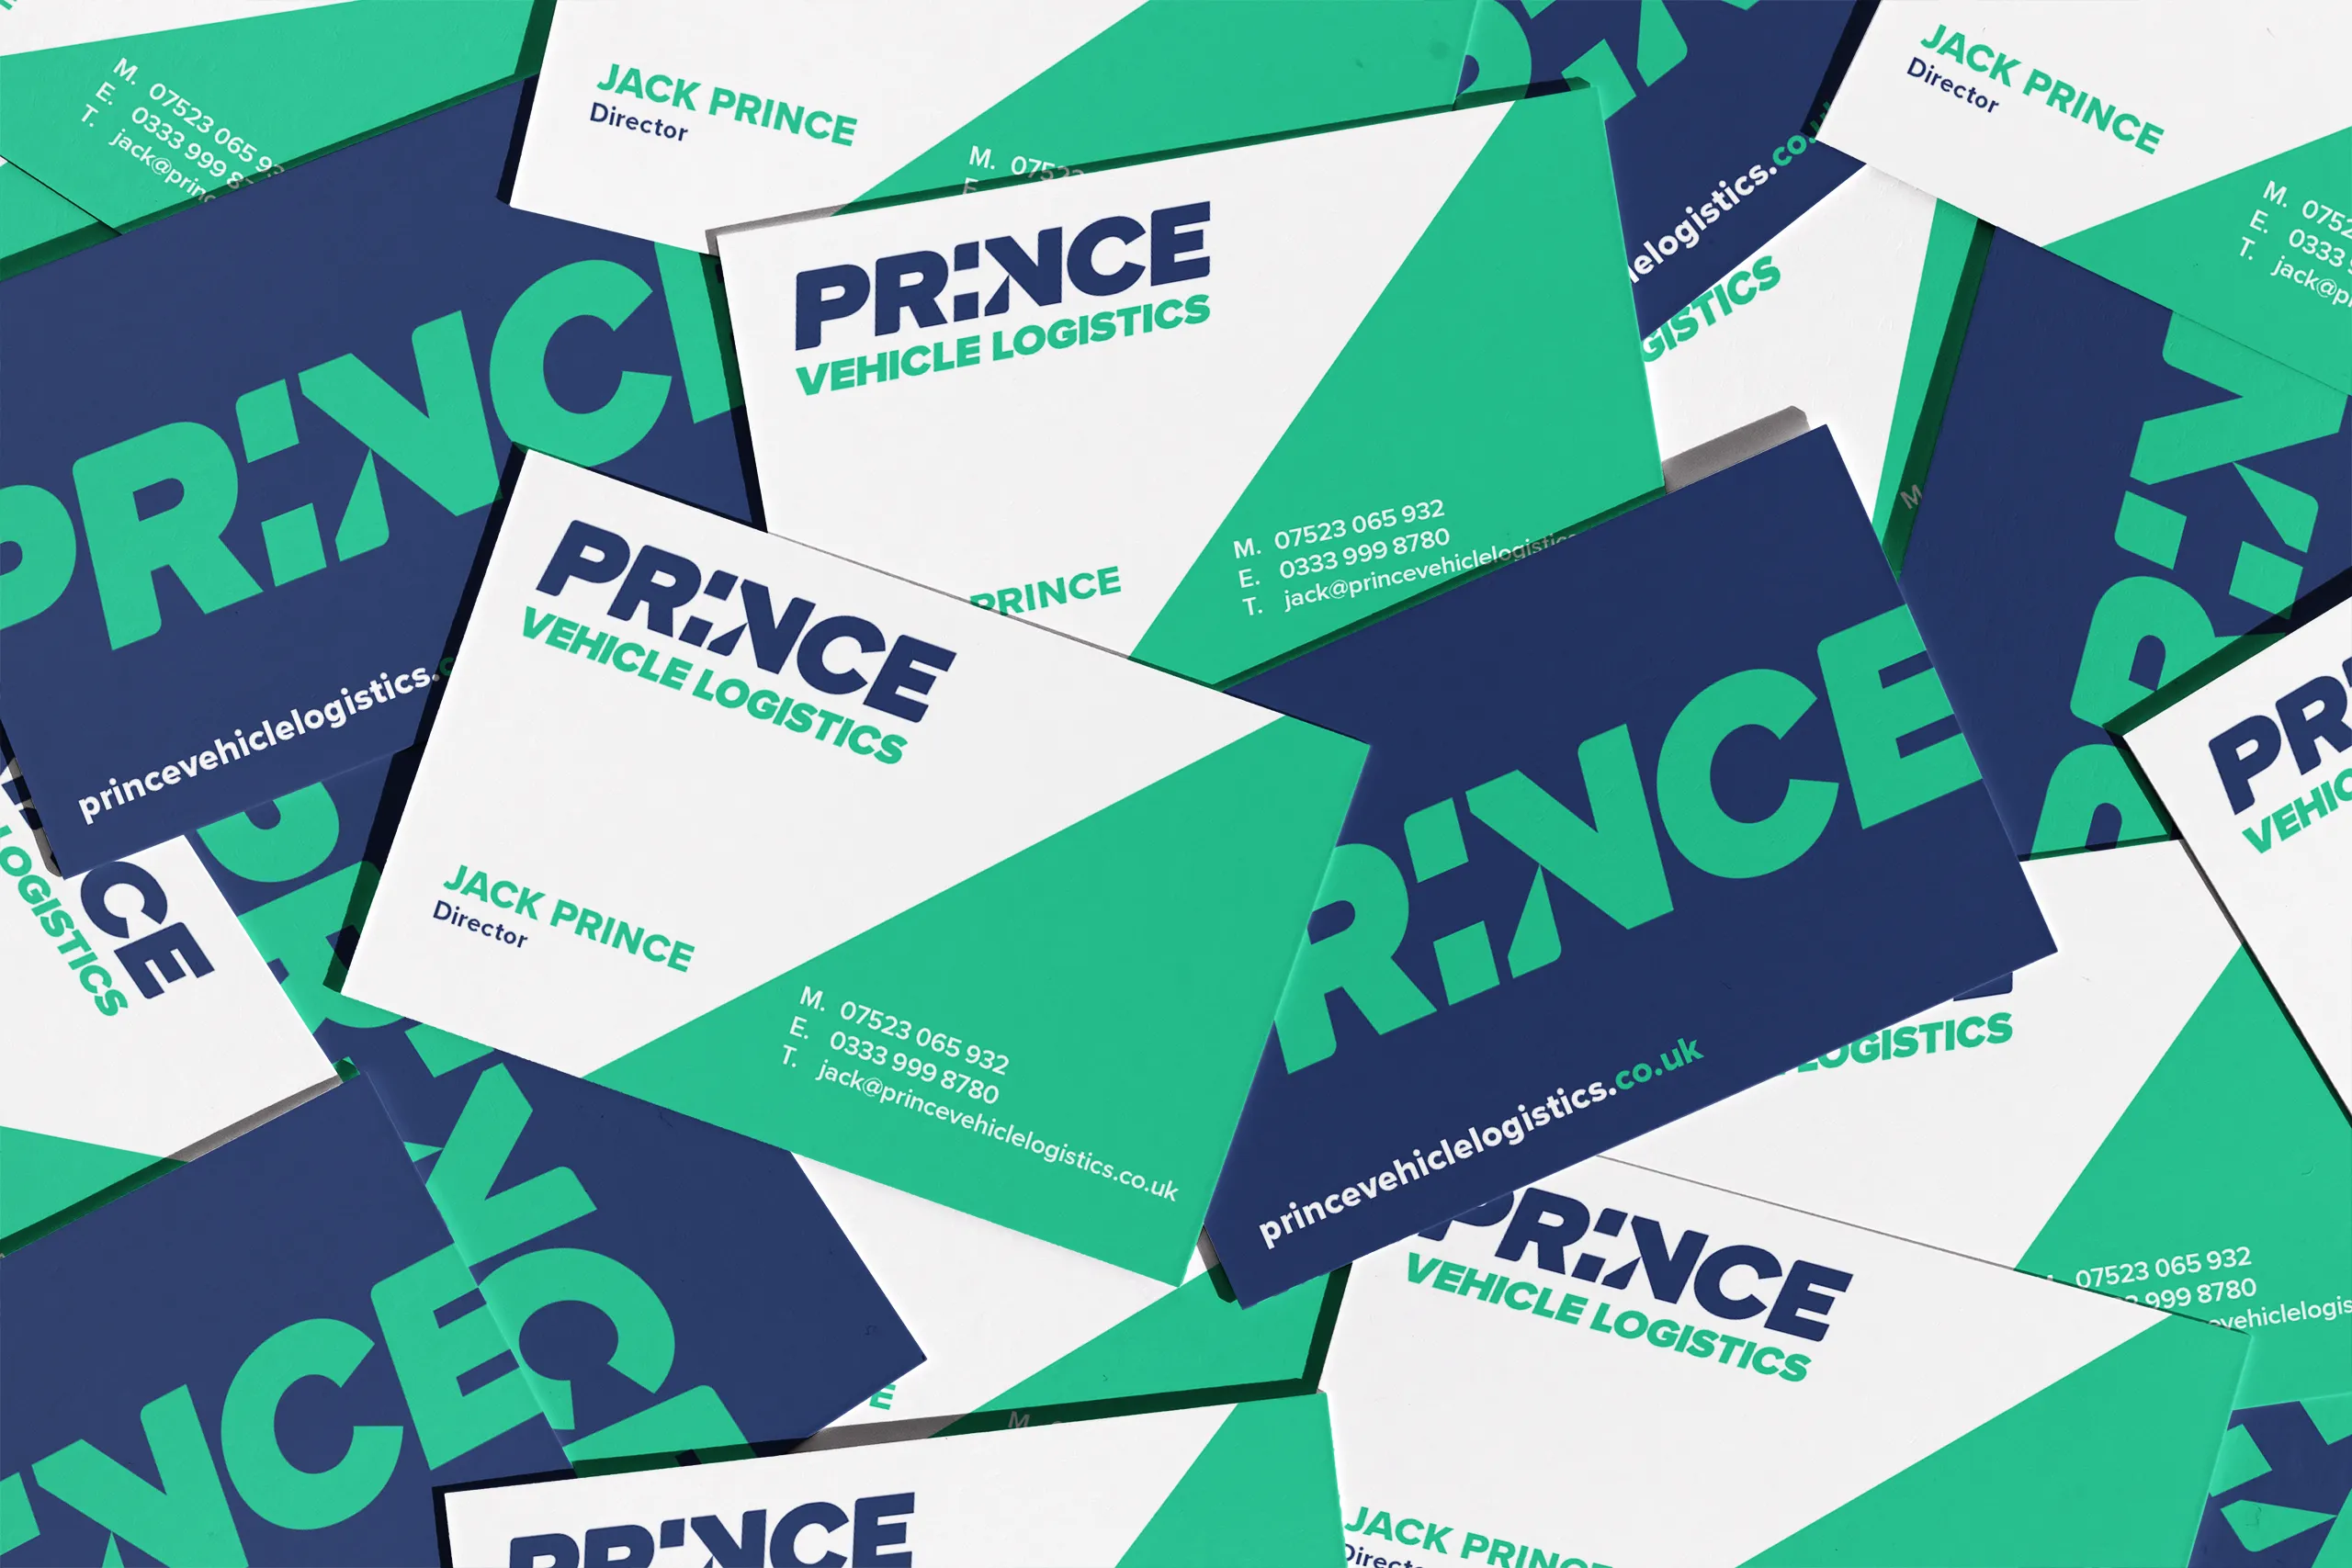 Prince Vehicle Logistics business card design